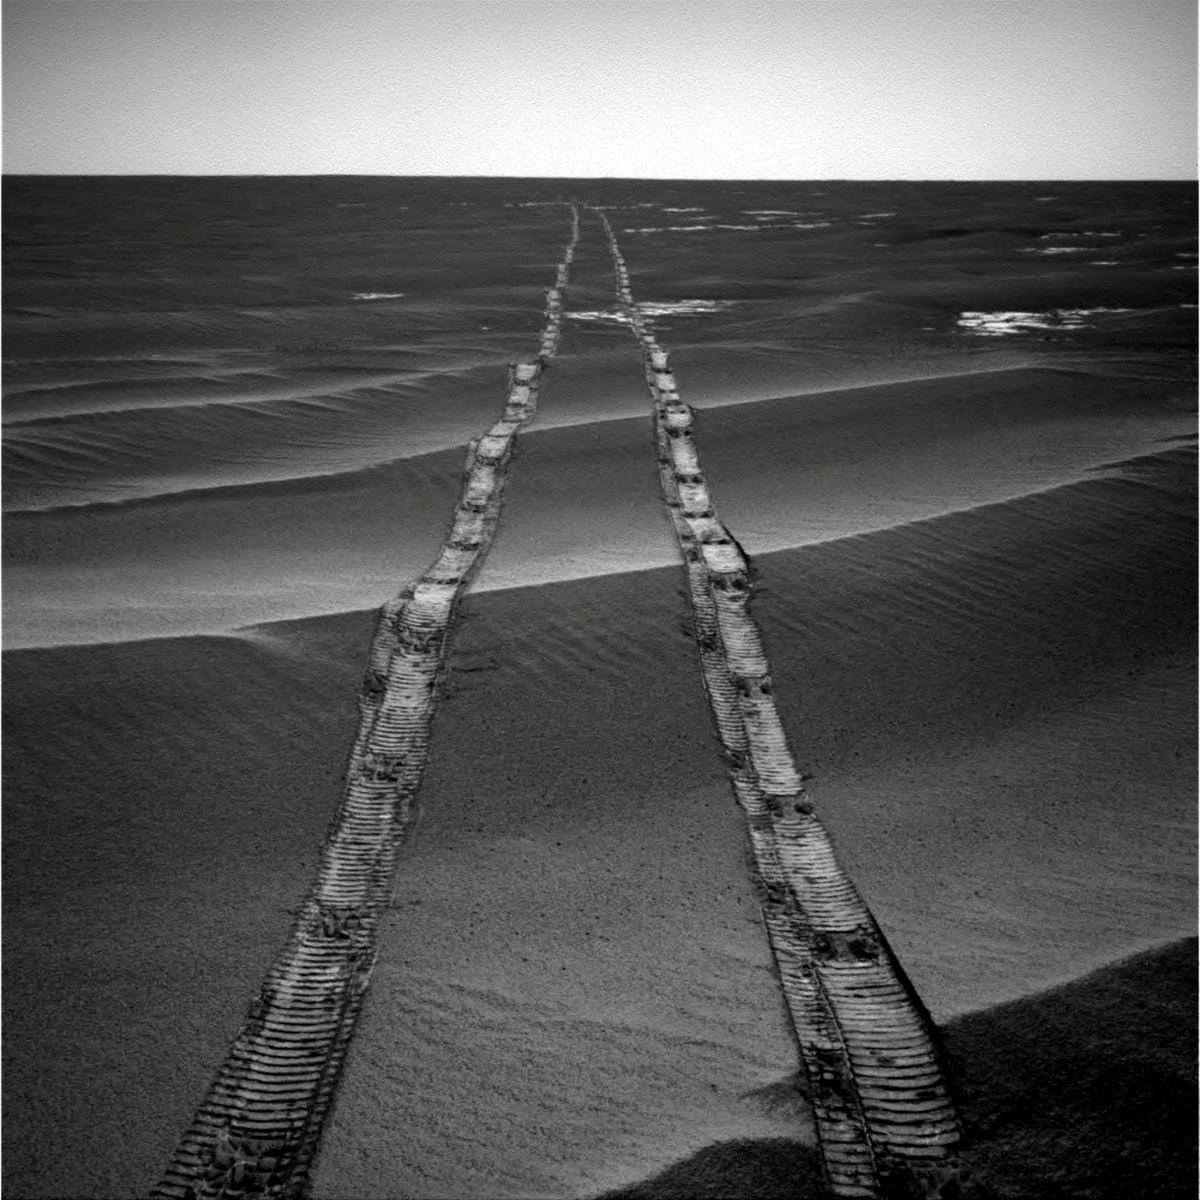 FILE PHOTO: NASA’s Mars Exploration Rover Opportunity tracks on planet